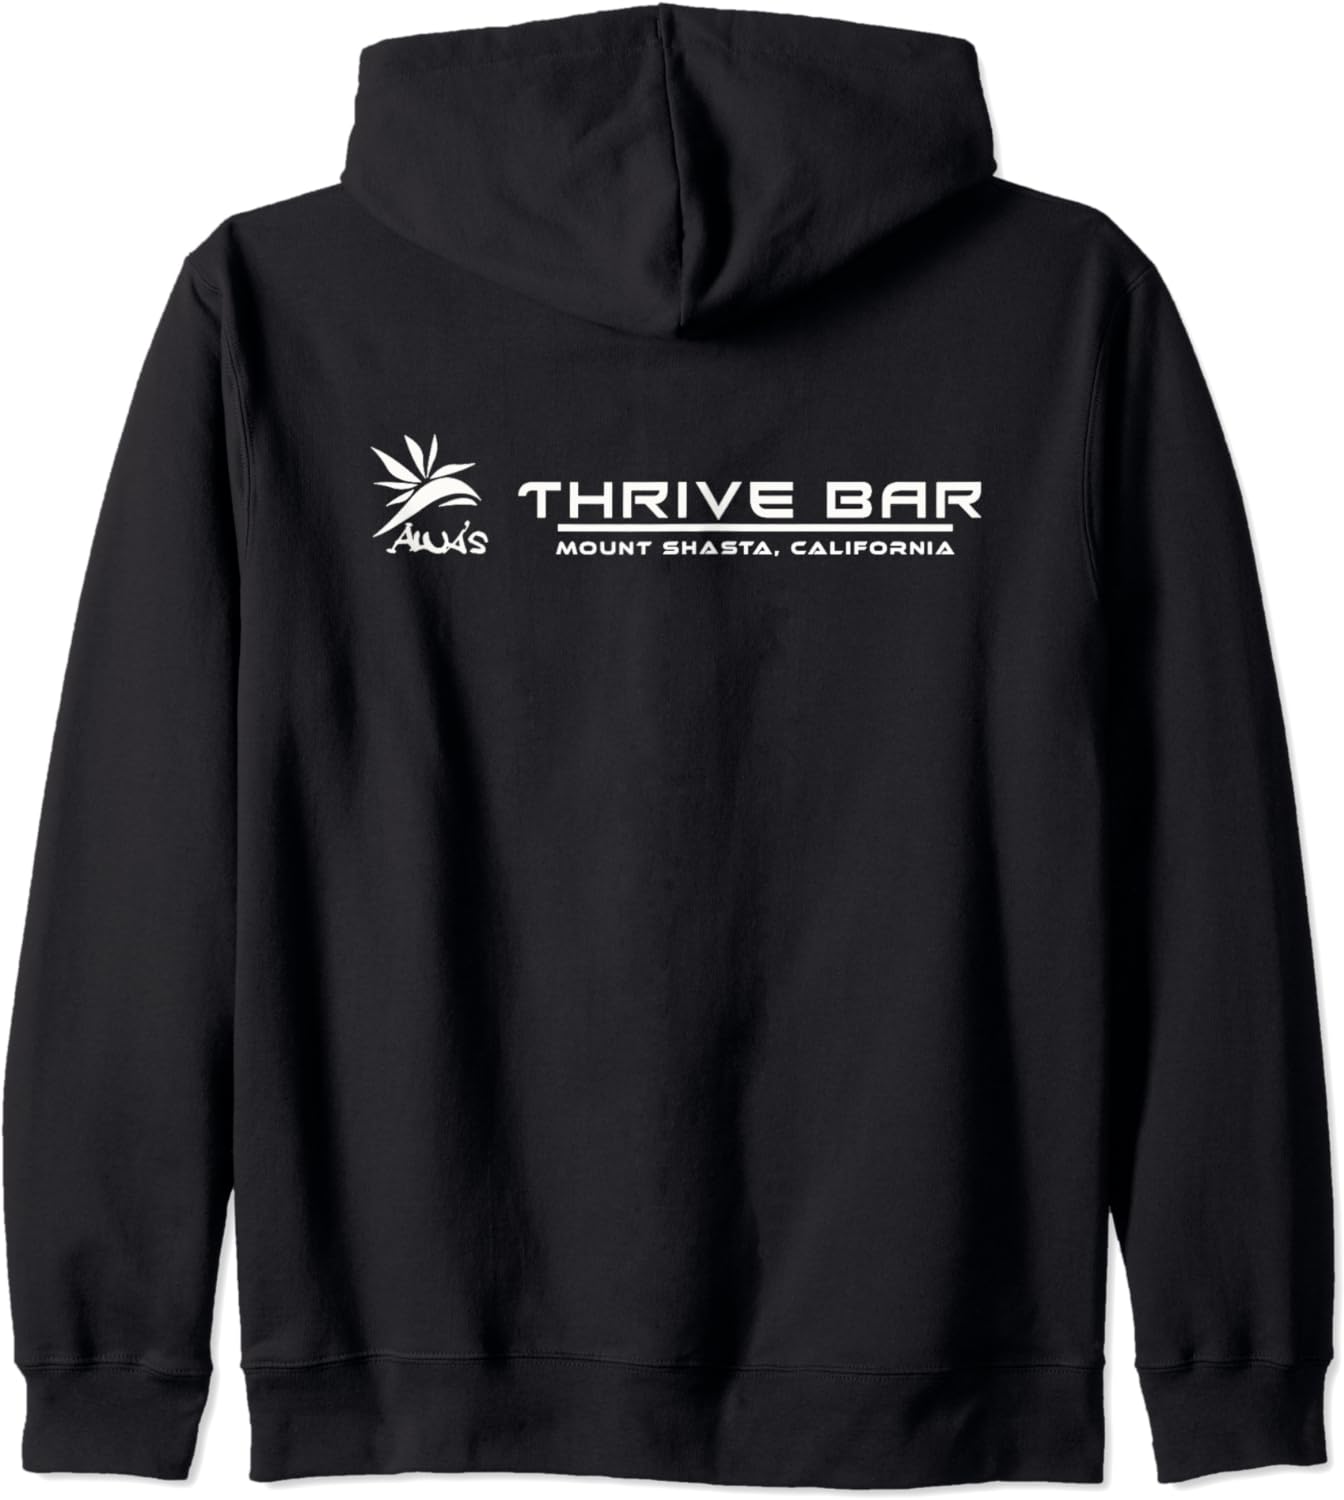 Aluas Thrive Bar - Mount Shasta Zip Hoodie